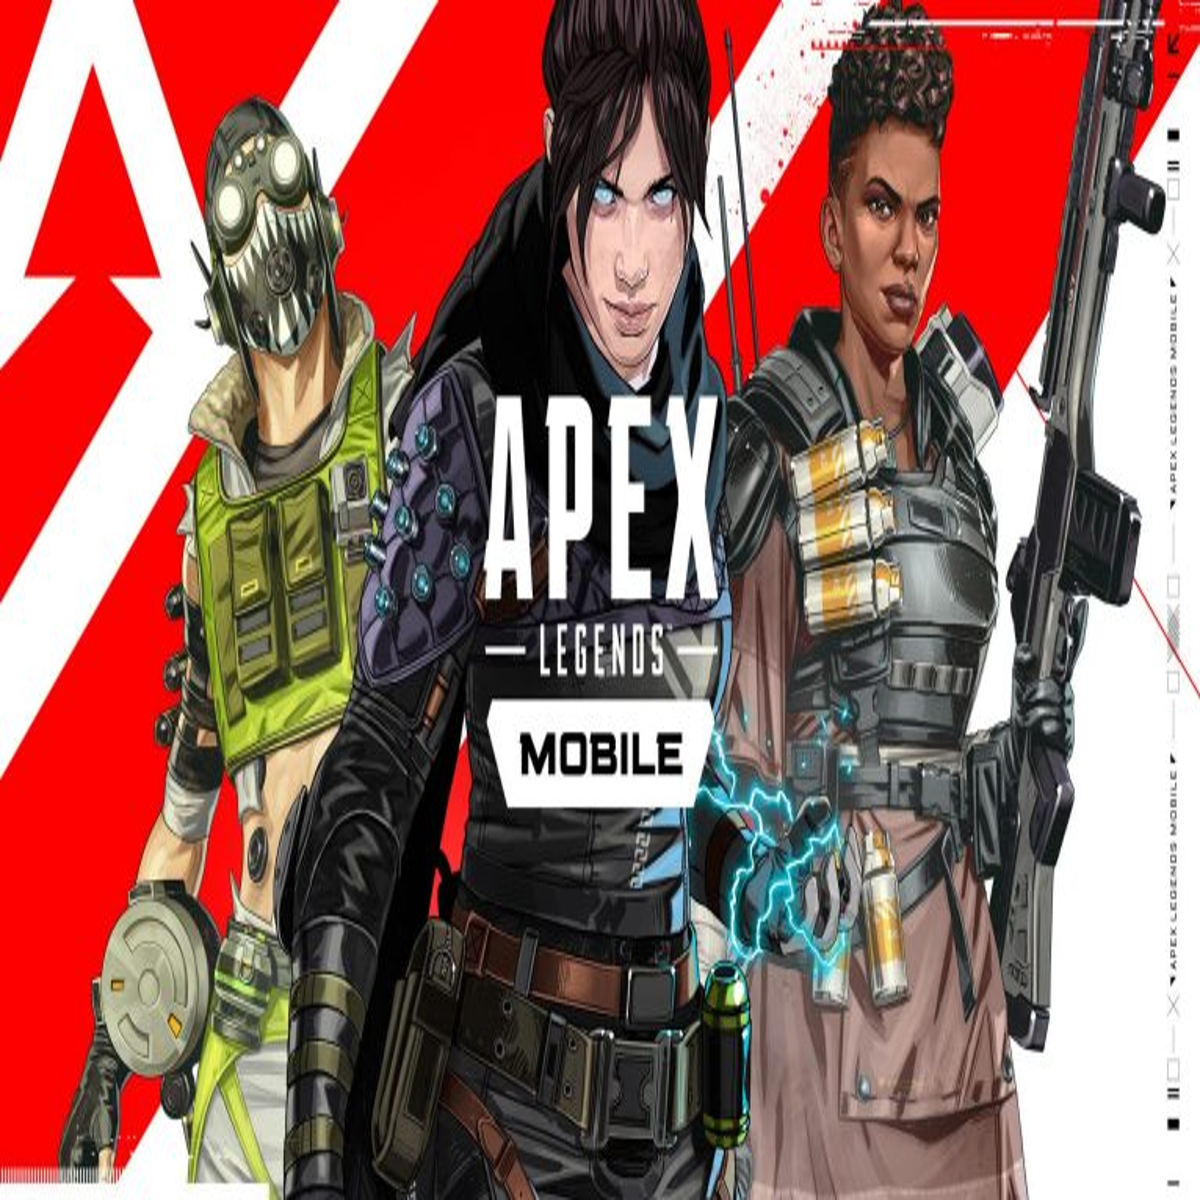 Apex Legends Mobile - IGN